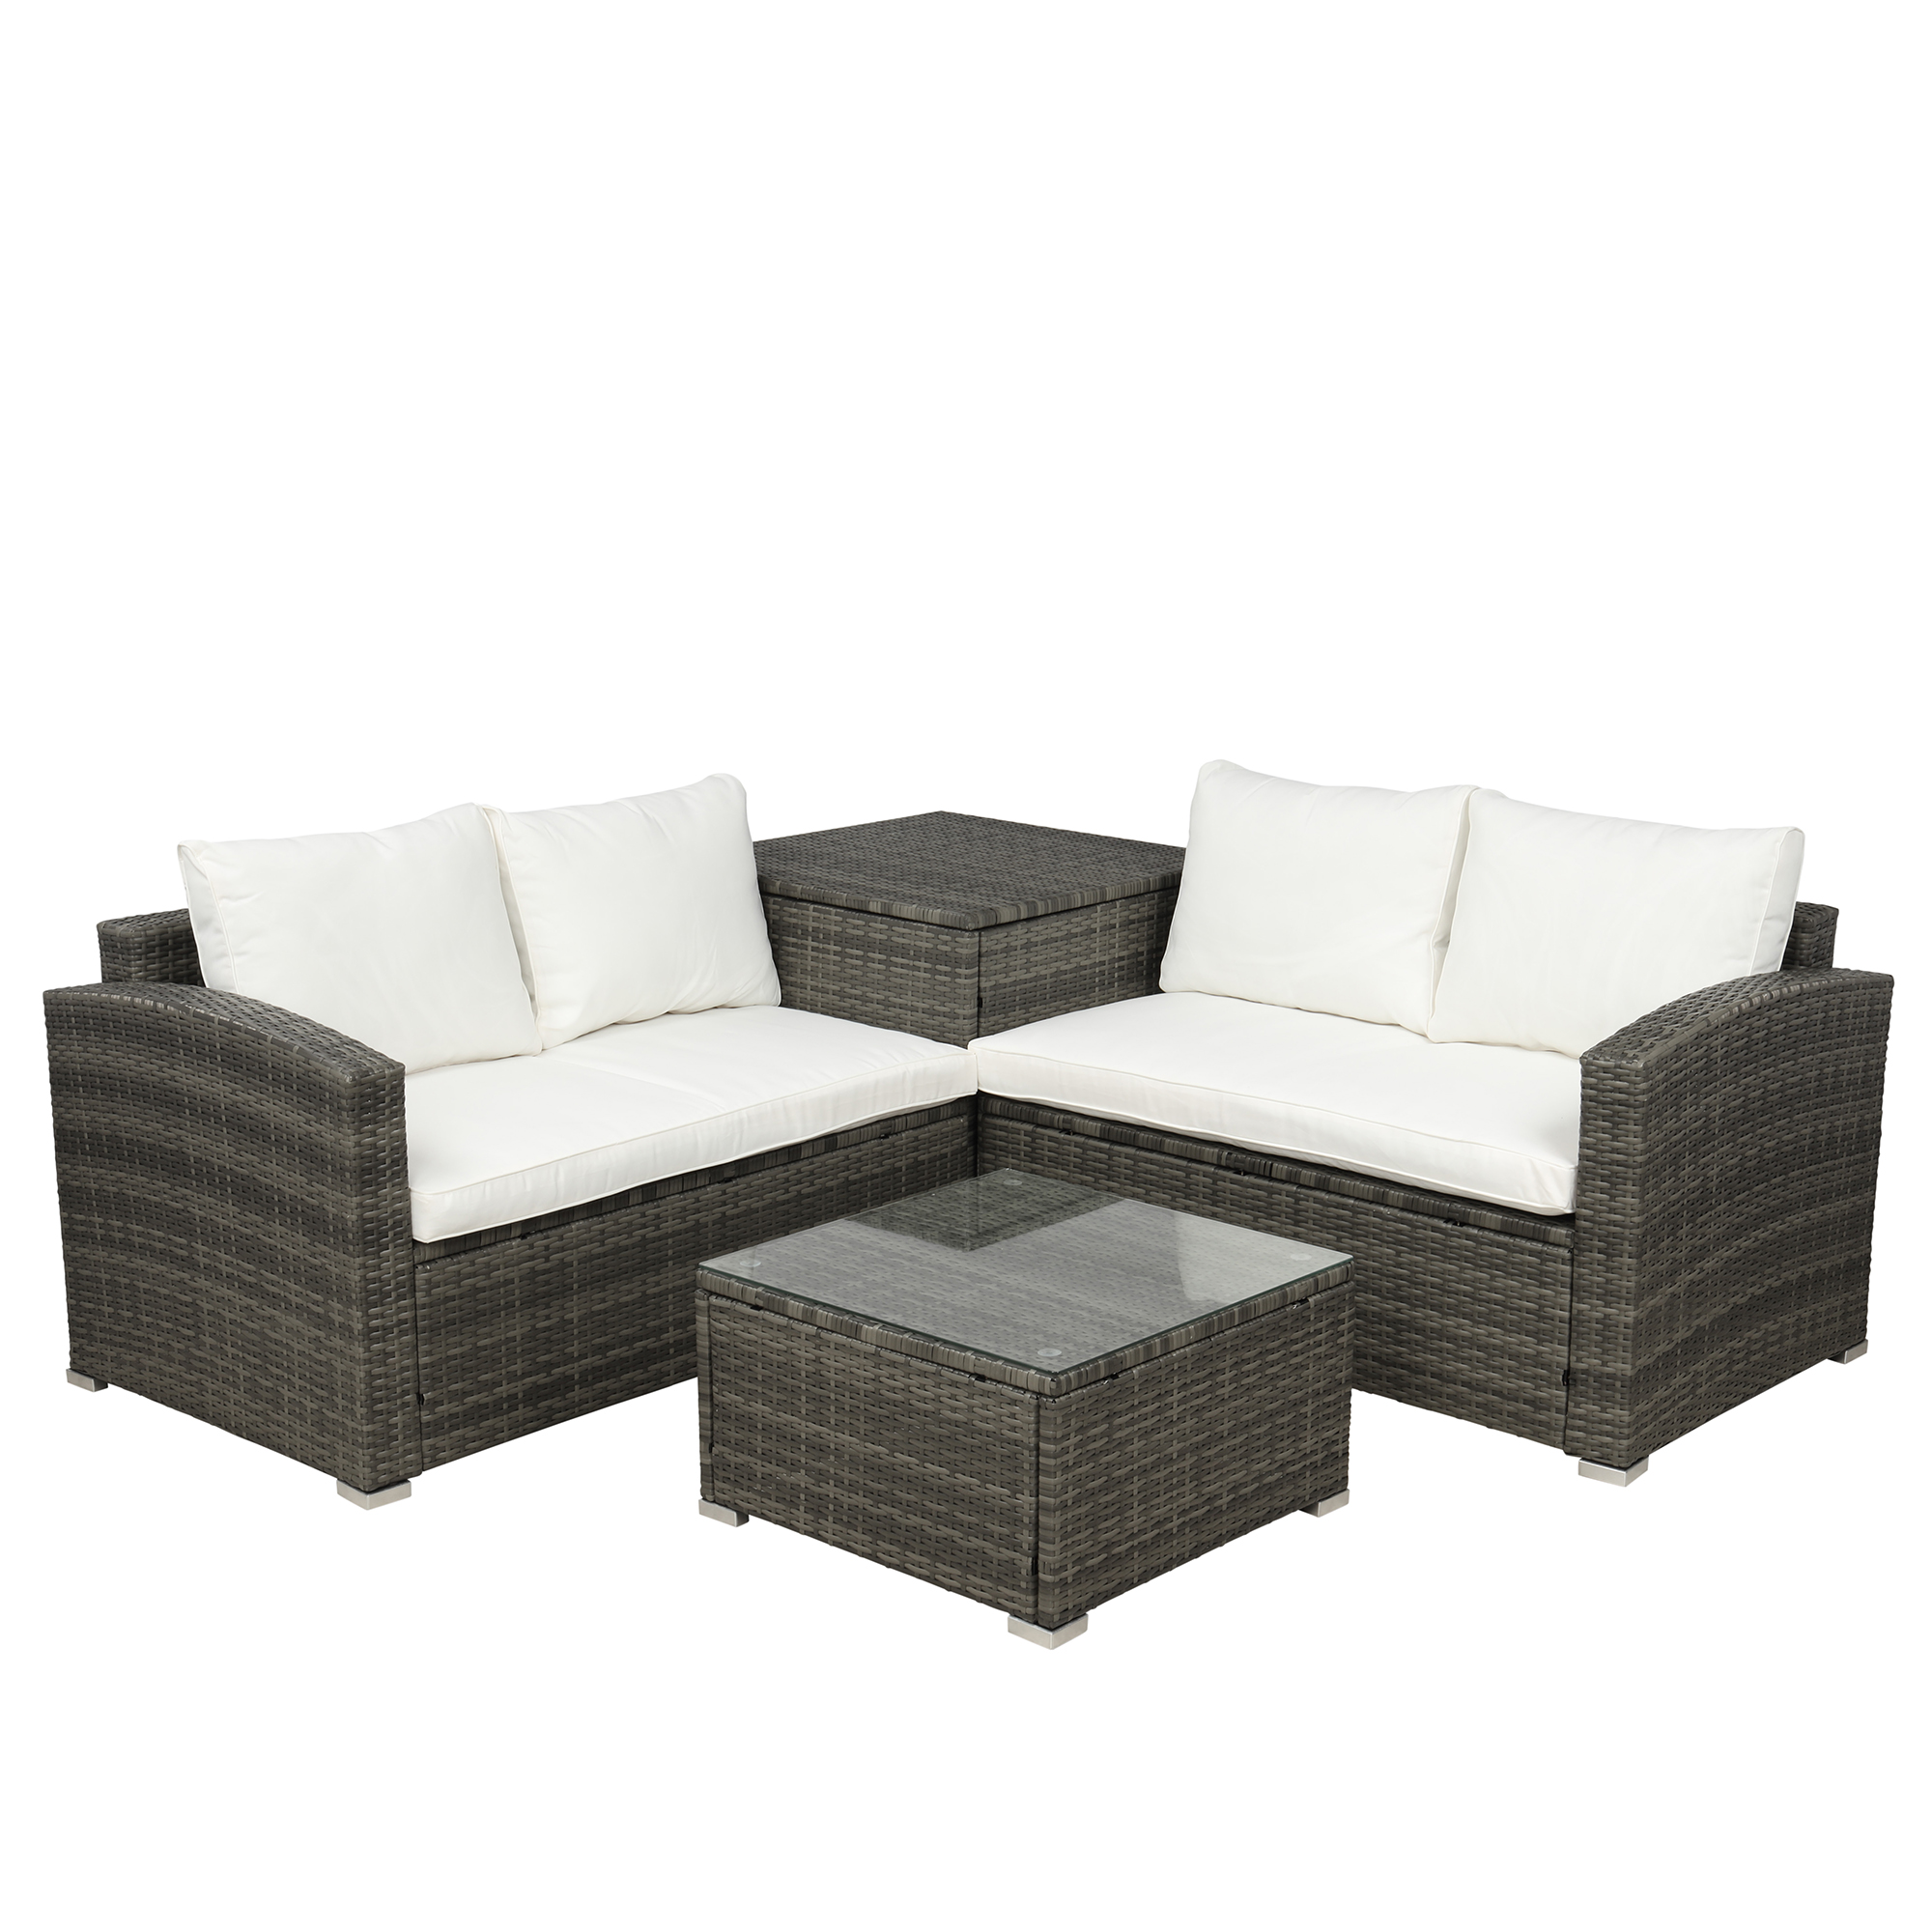 Artlia 4 PCS Outdoor Cushioned PE Rattan Sectional Sofa Set Garden Patio Furniture Set (Beige Cushion) - image 4 of 7